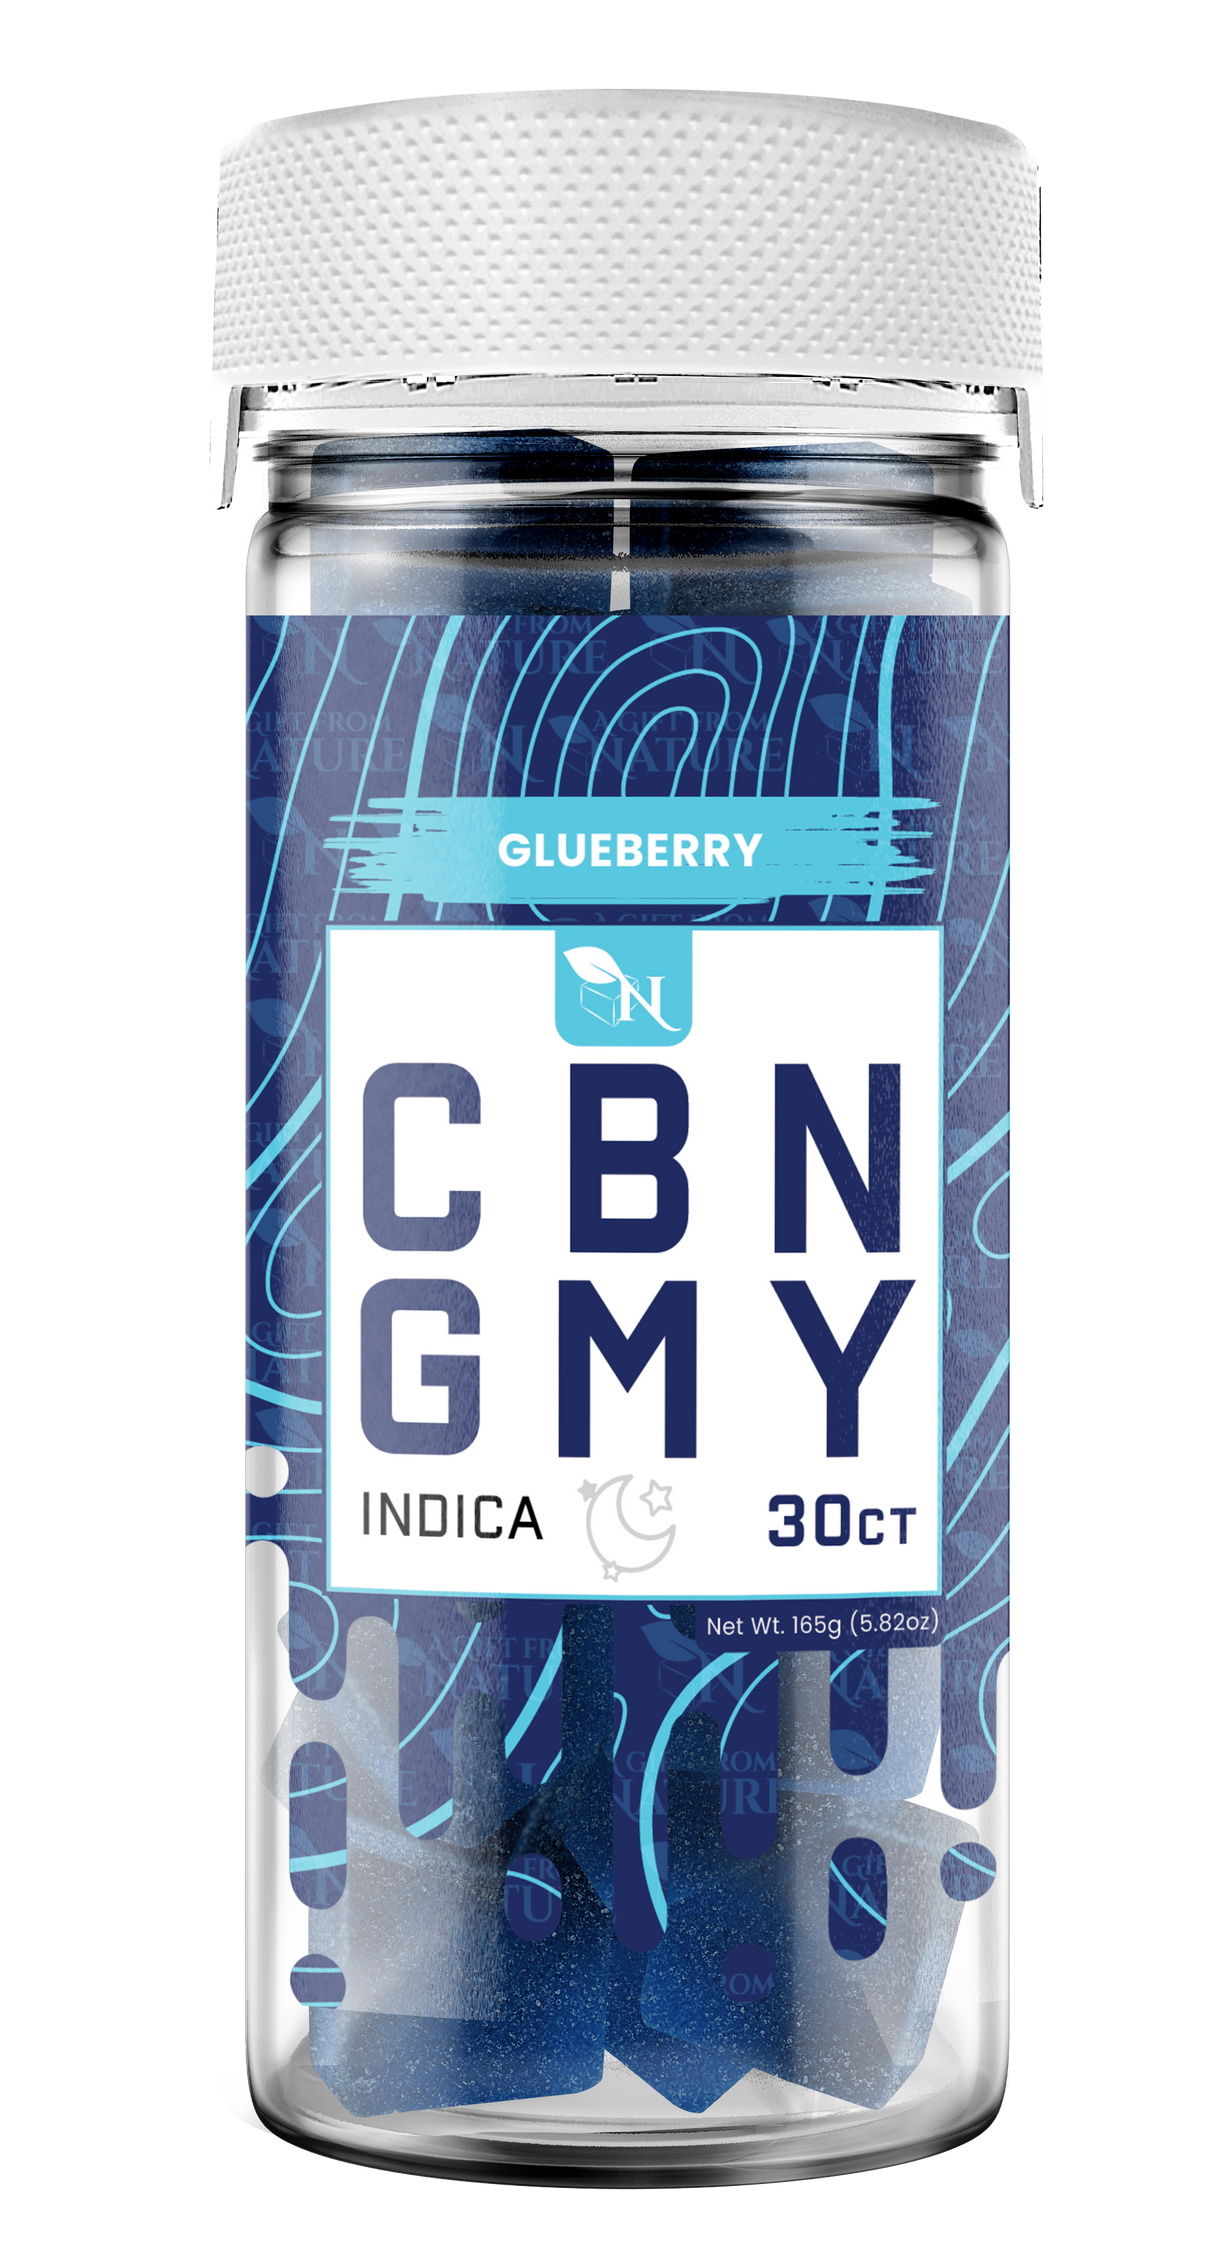 AGFN CBN Gummy: Glueberry Indica (1500MG)